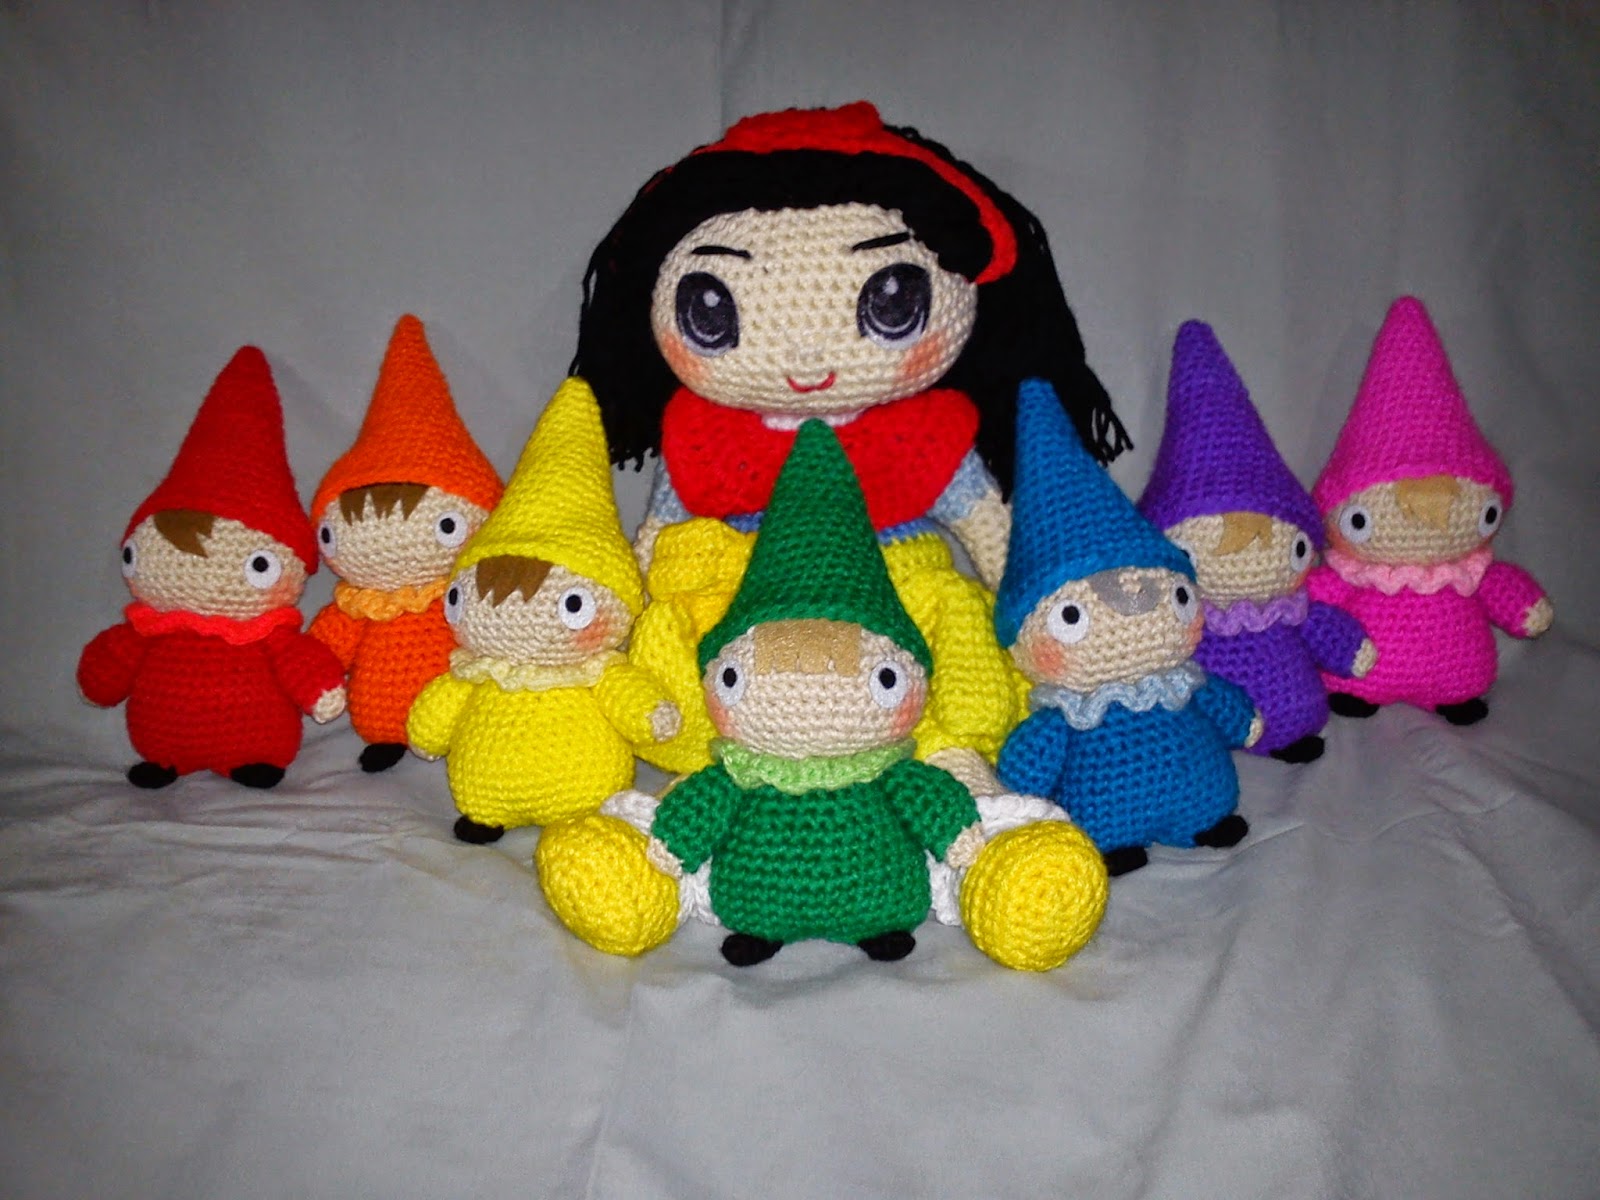 Snowwhite and Seven Dwarfs Free Crochet Pattern